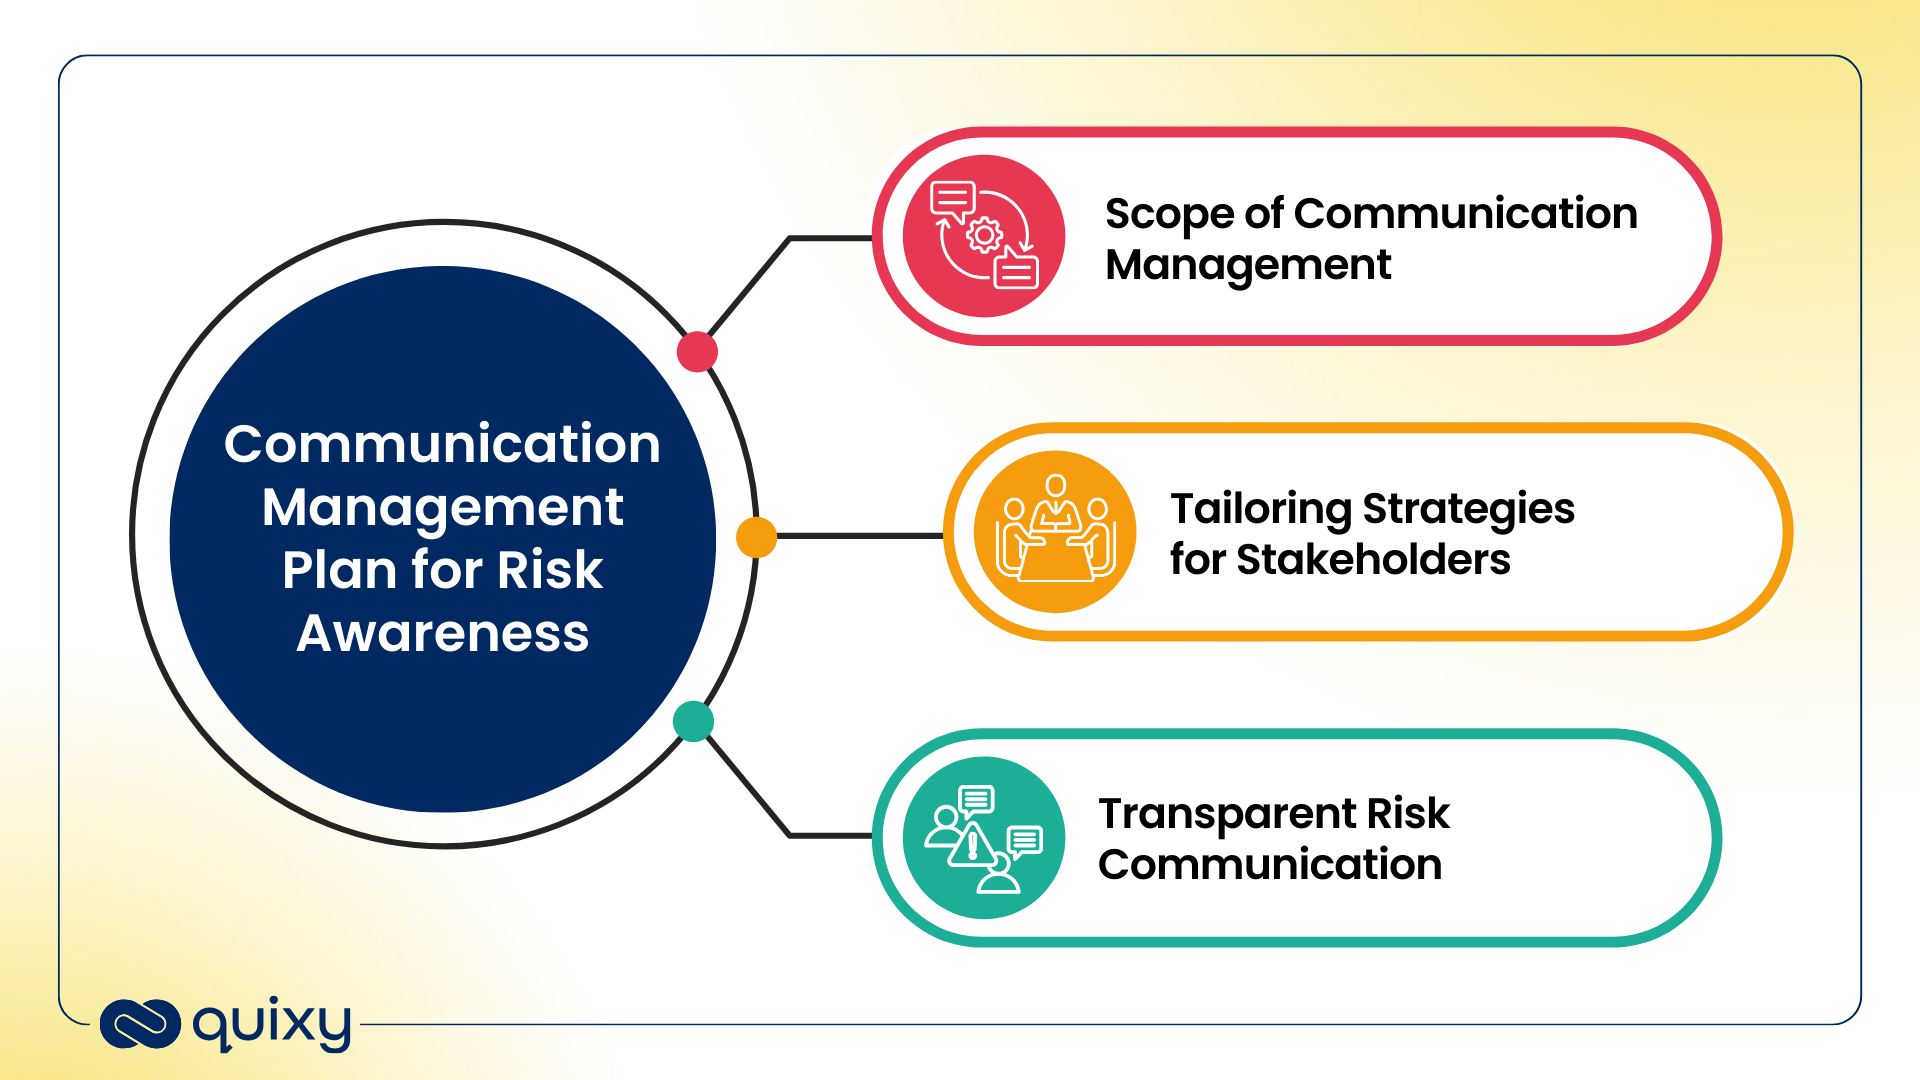 Communication Management Plan for Risk Awareness